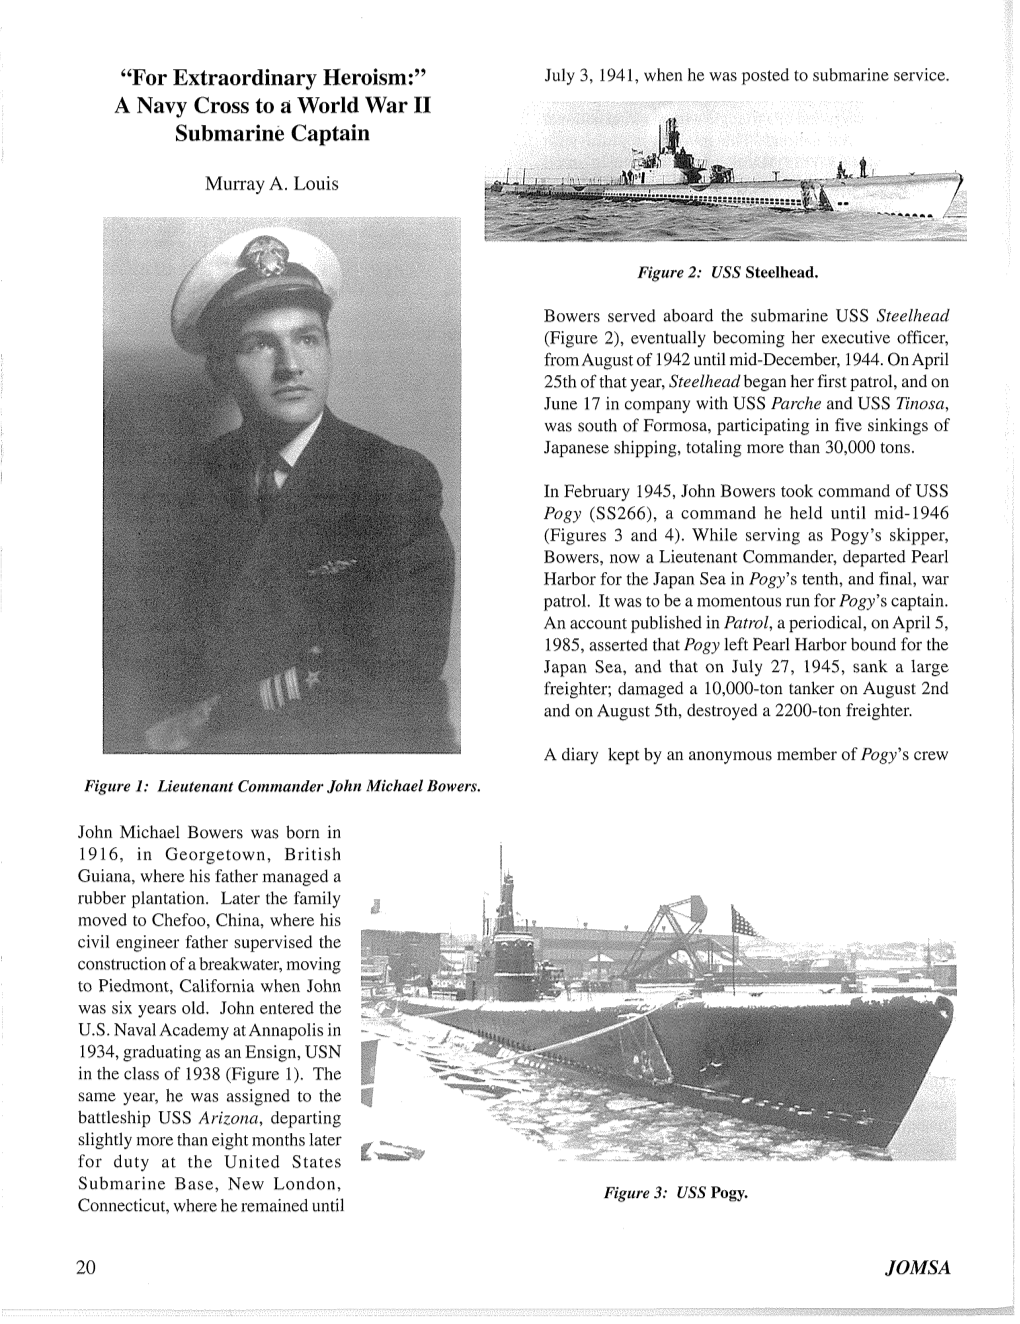 "For Extraordinary Heroism:" a Navy Cross to a World War II Submarine